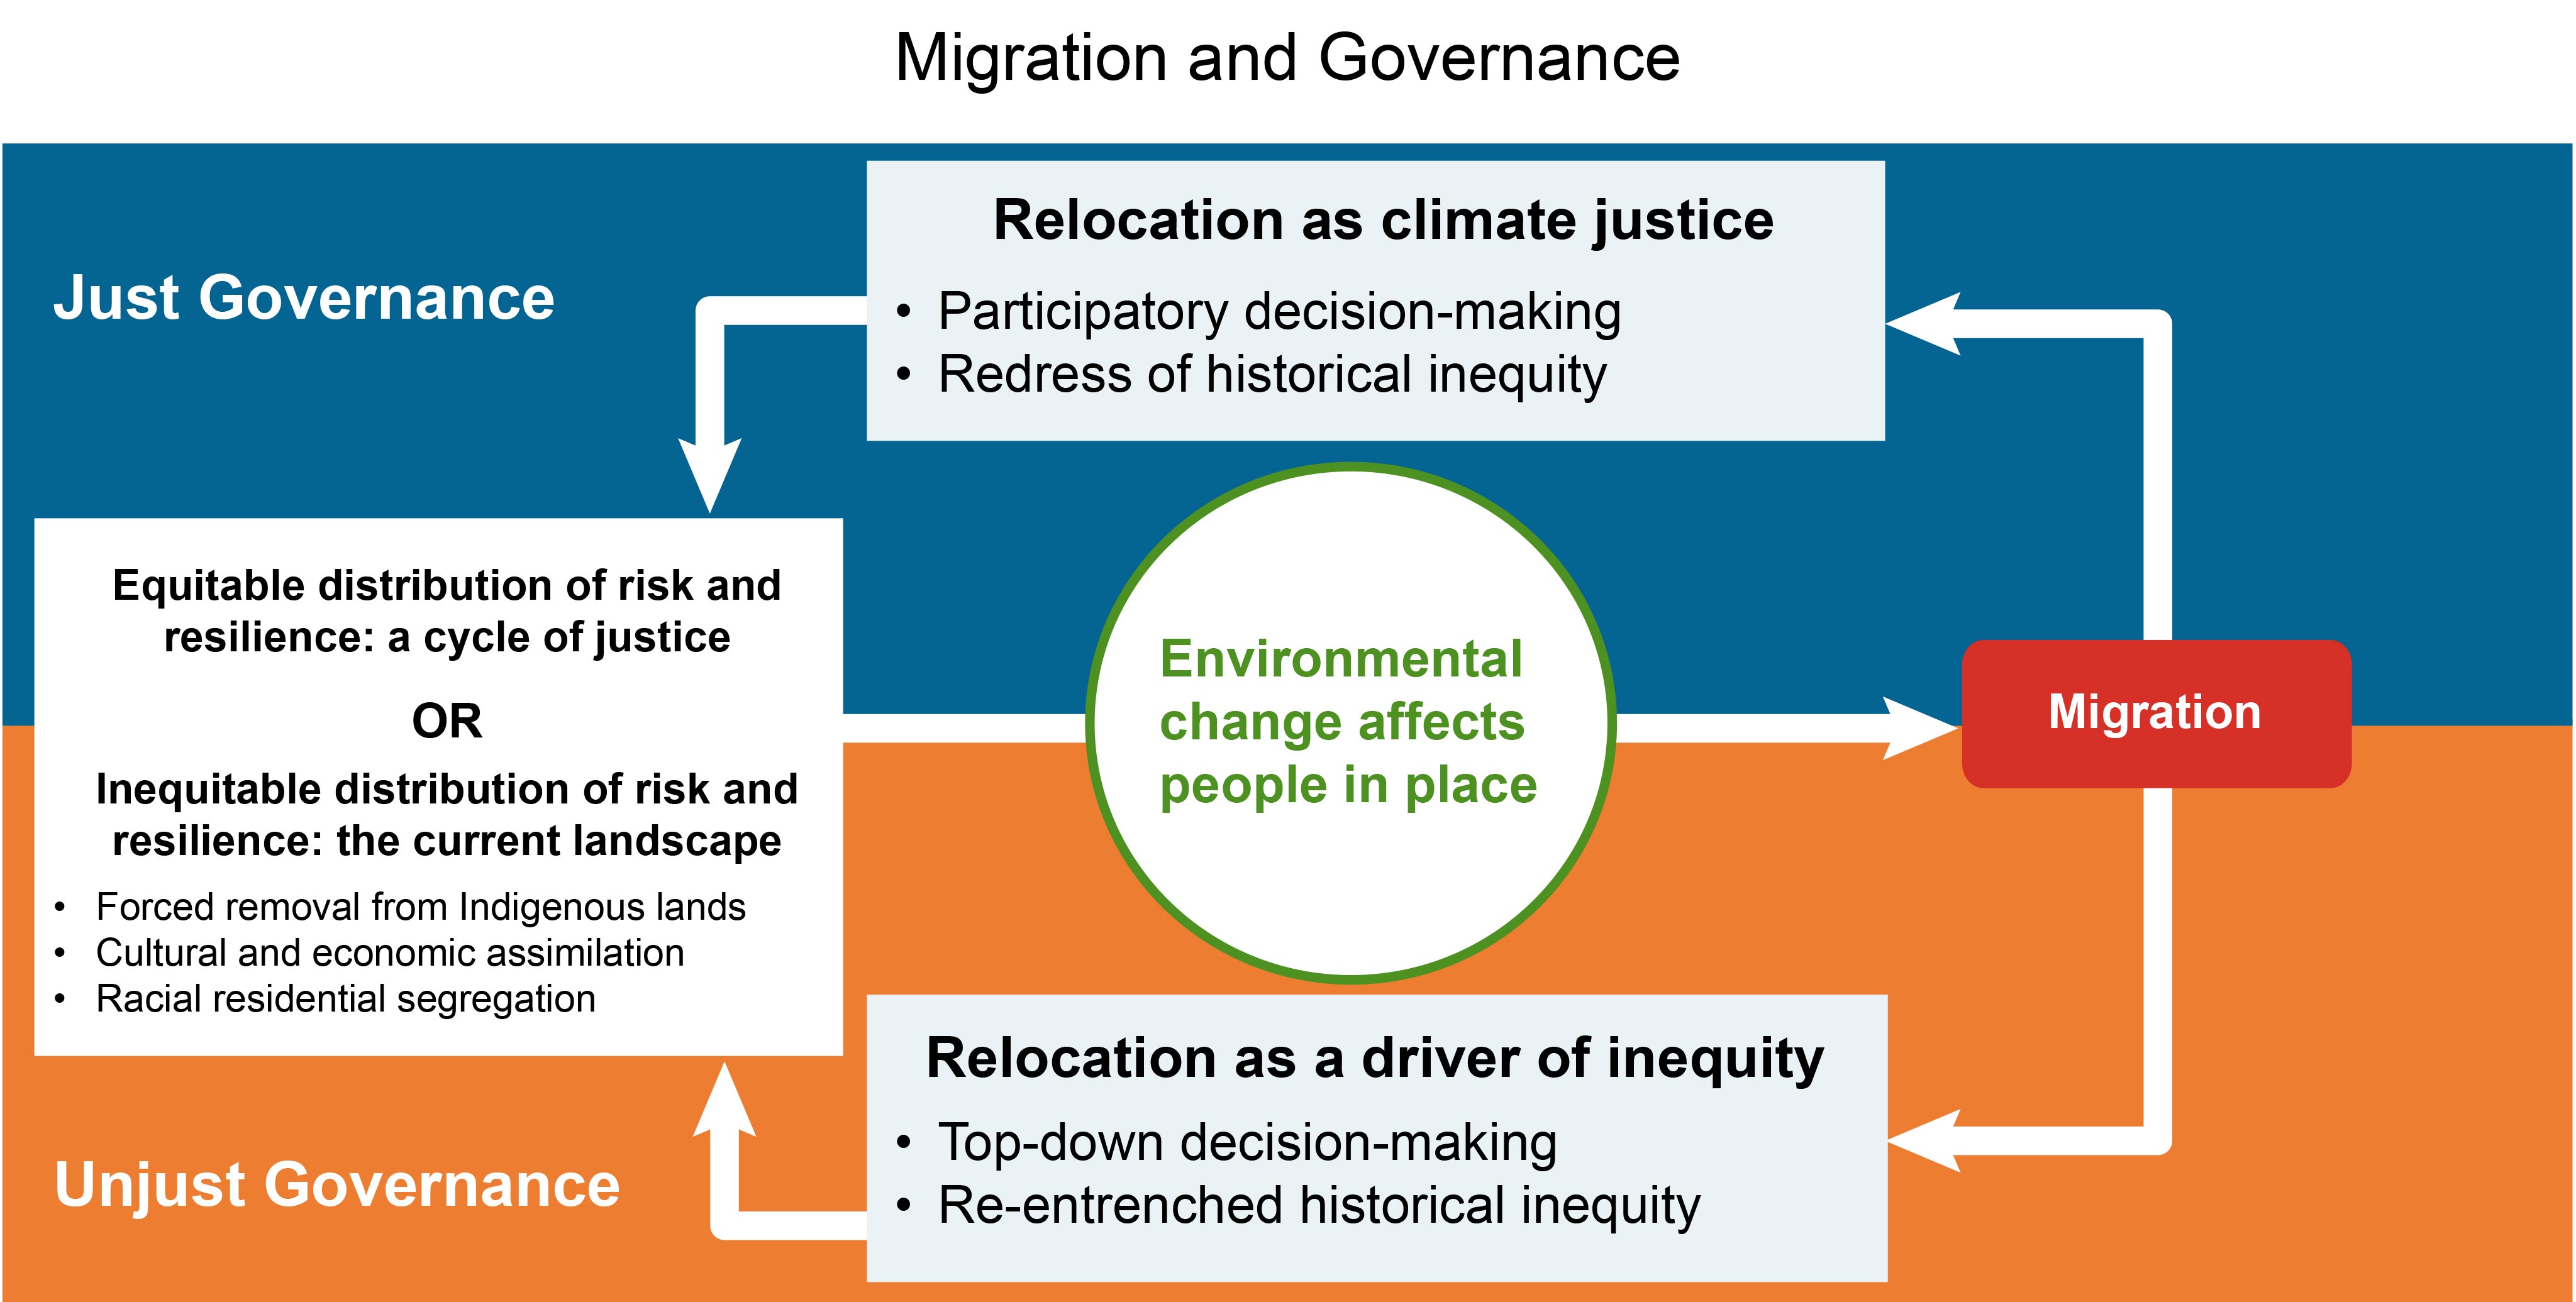 Migration and Governance